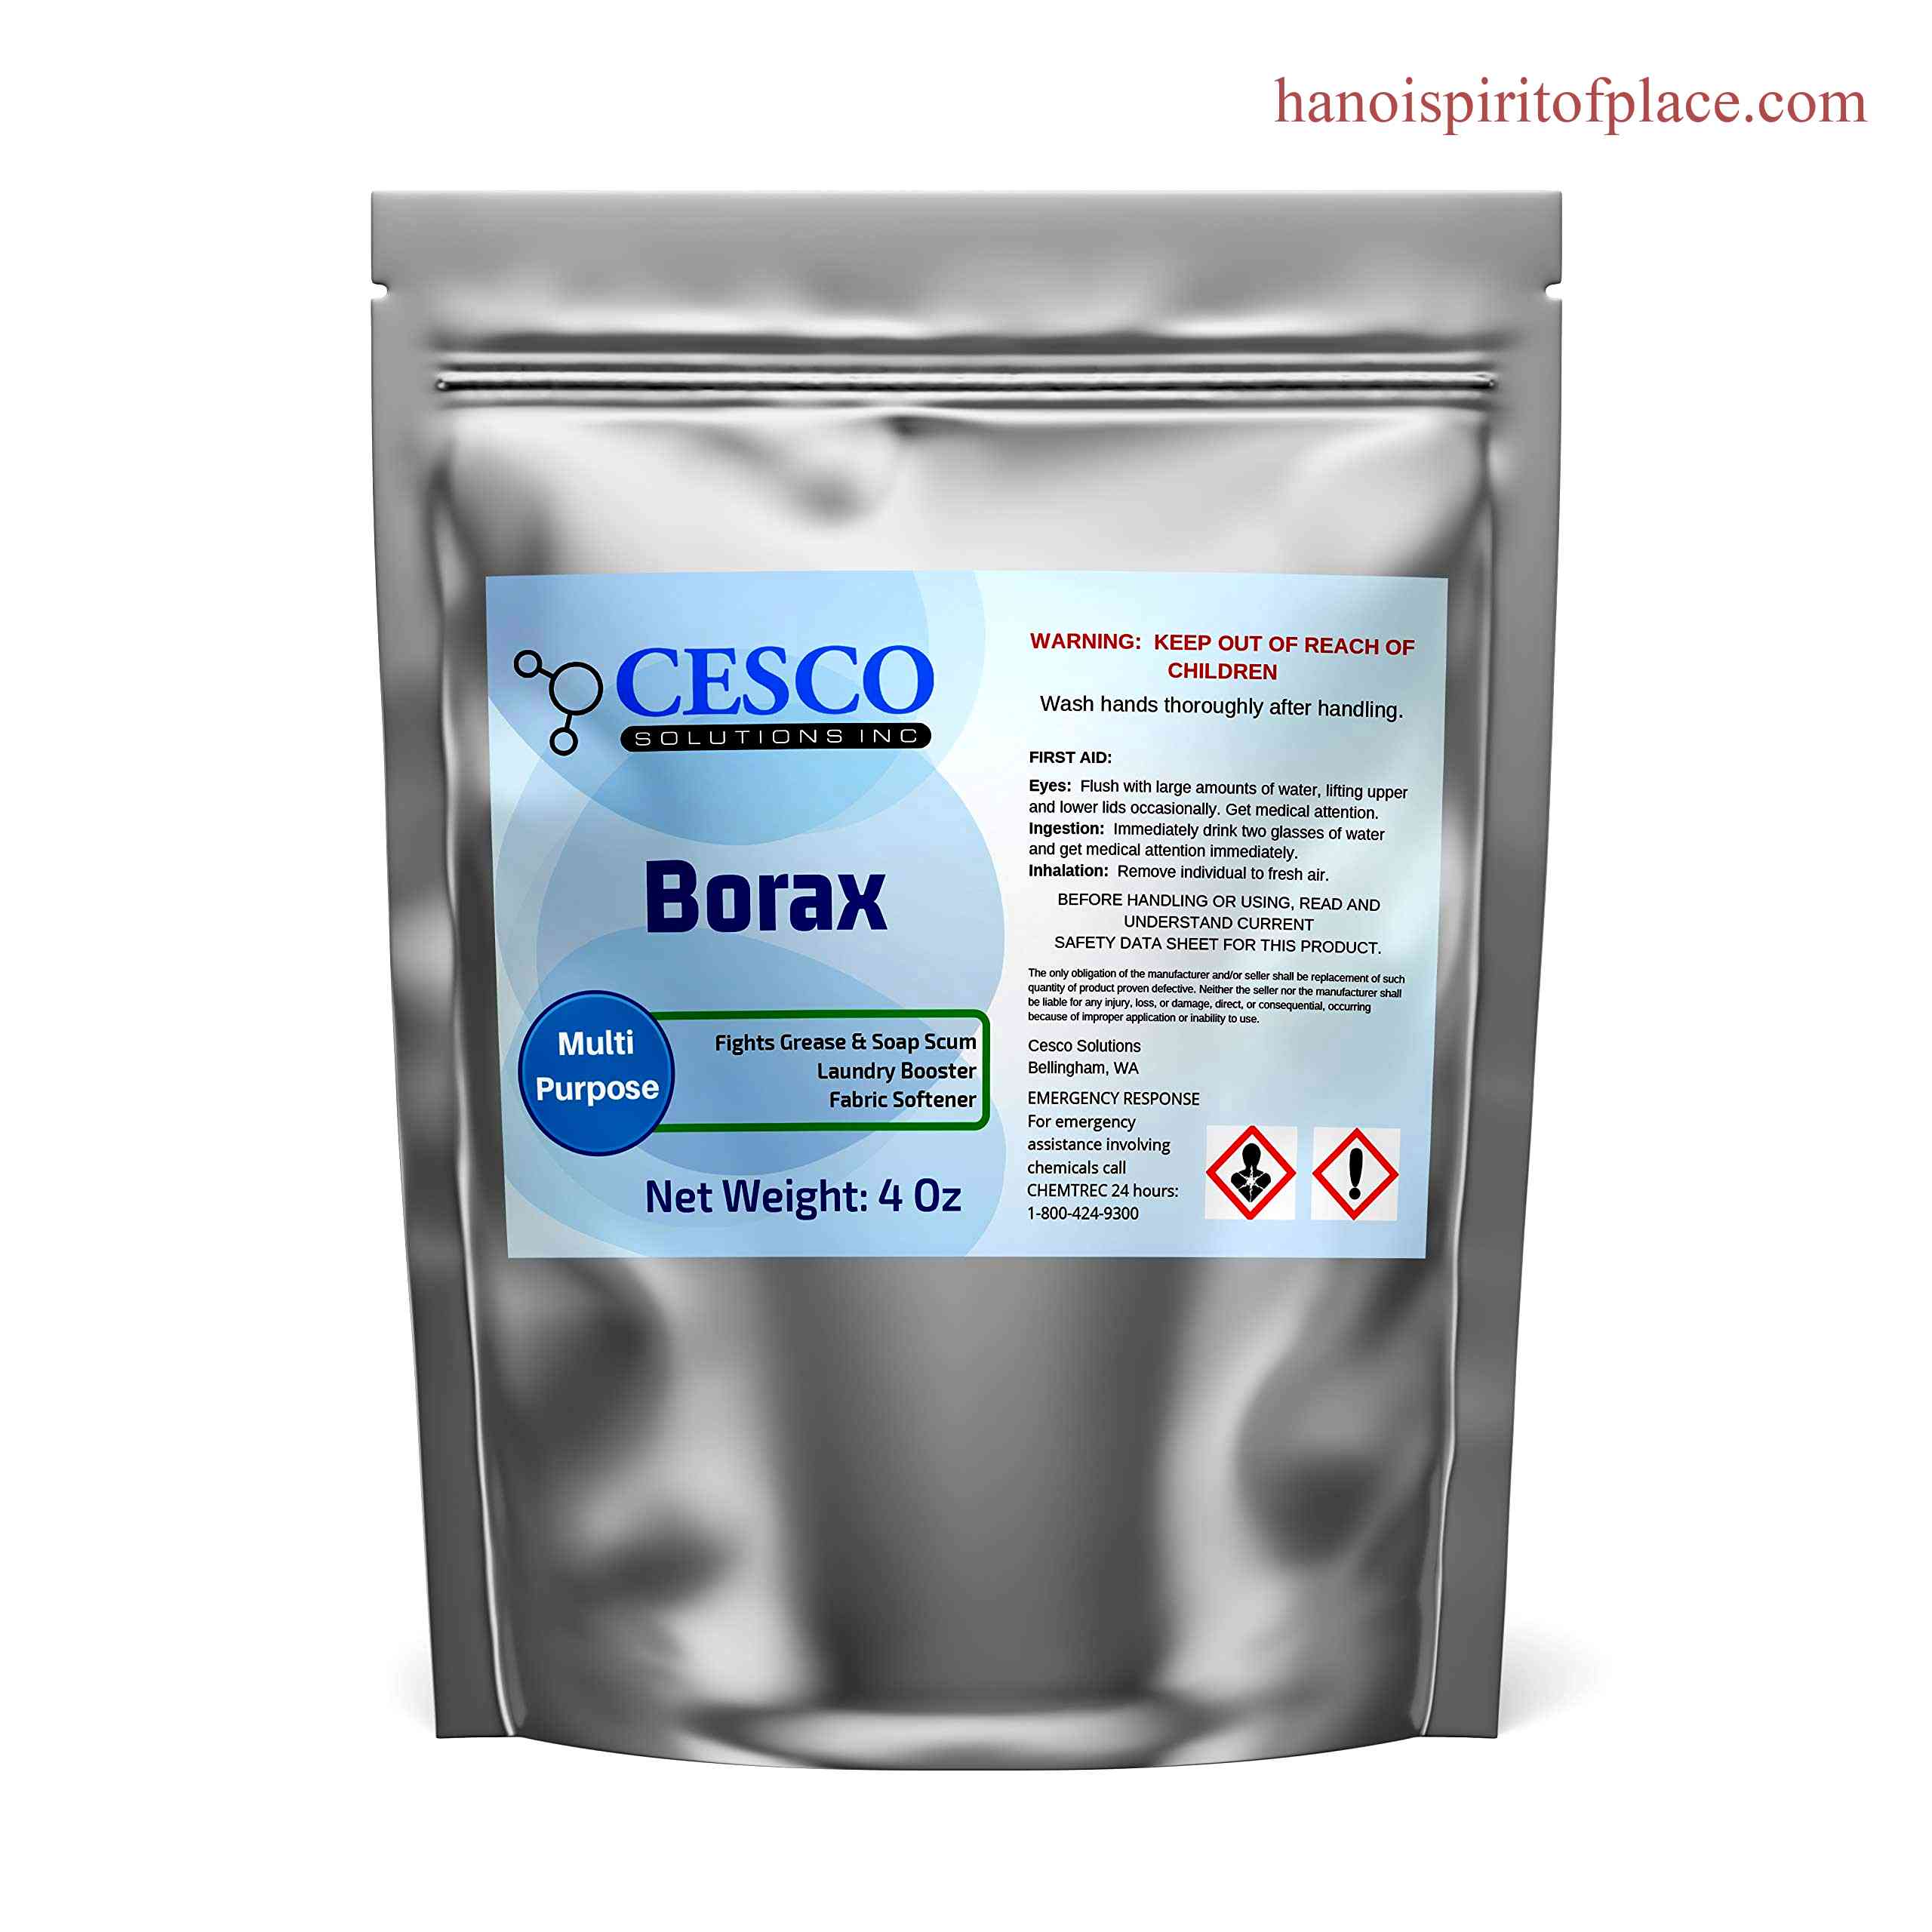 Symptoms of Borax Ingestion